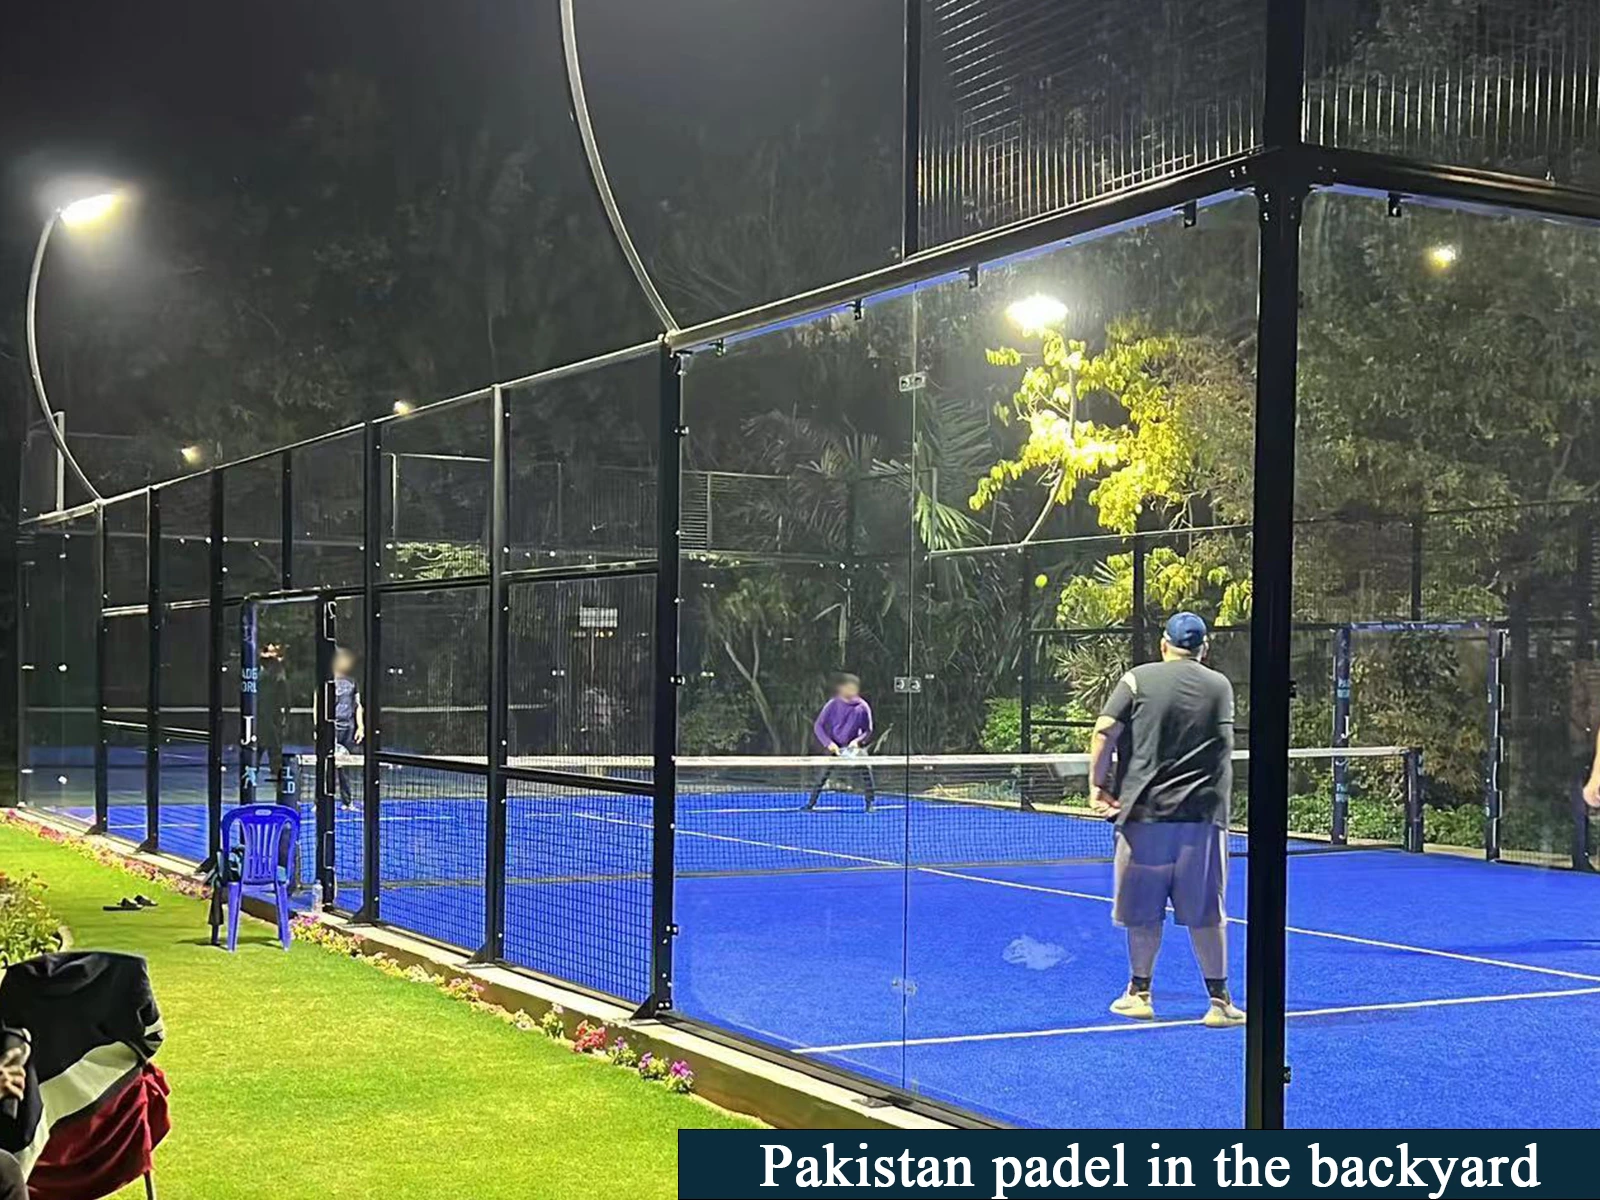 Pakistan Padel Court(backyard)